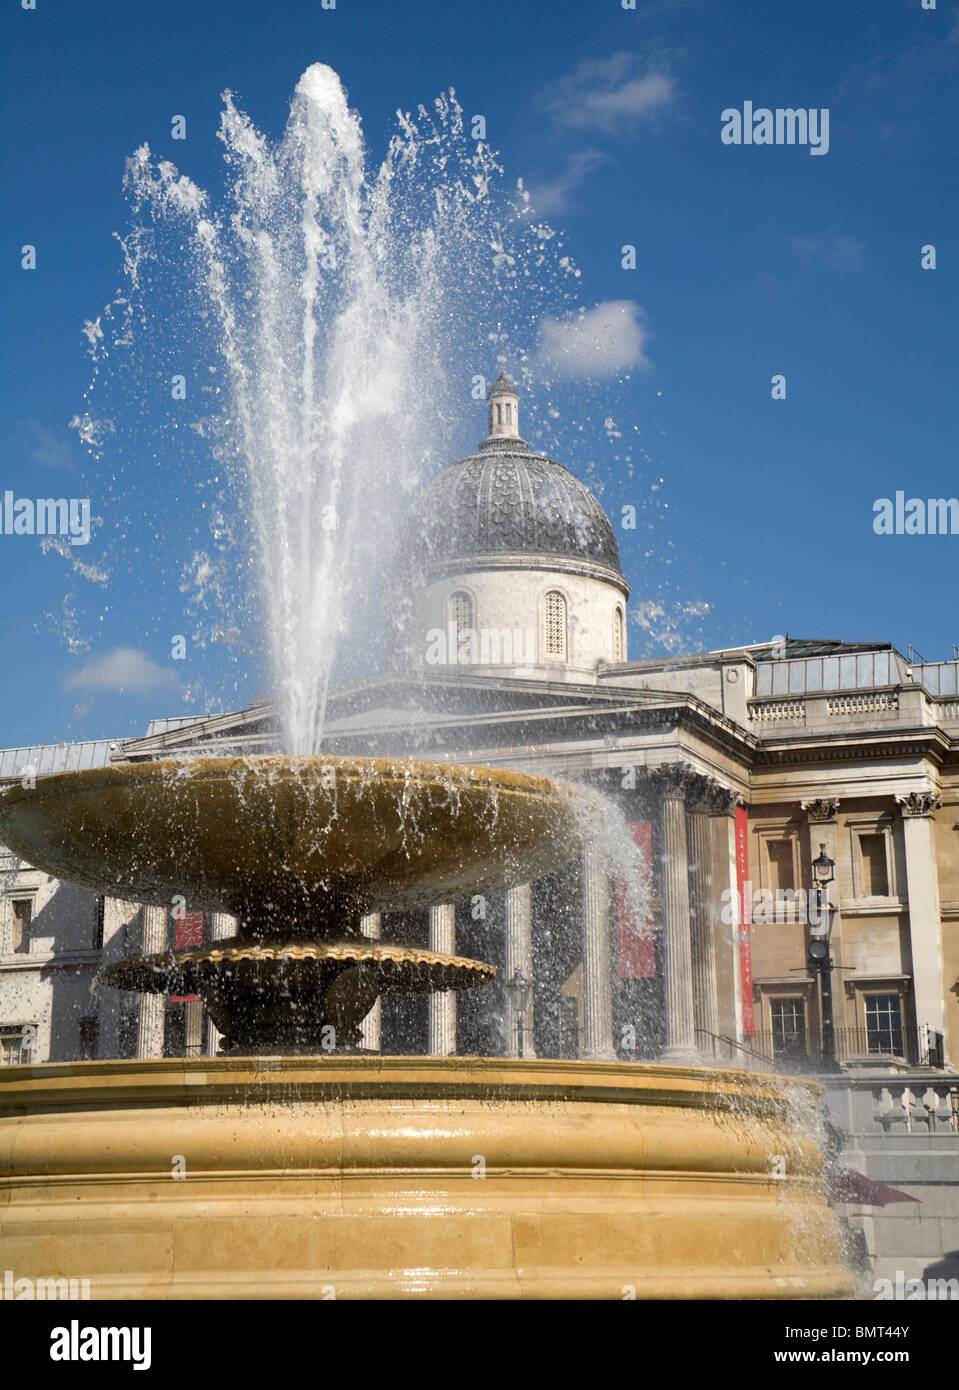 London - Nationalgalerie und Brunnen auf dem Trafalgar square Stockfoto